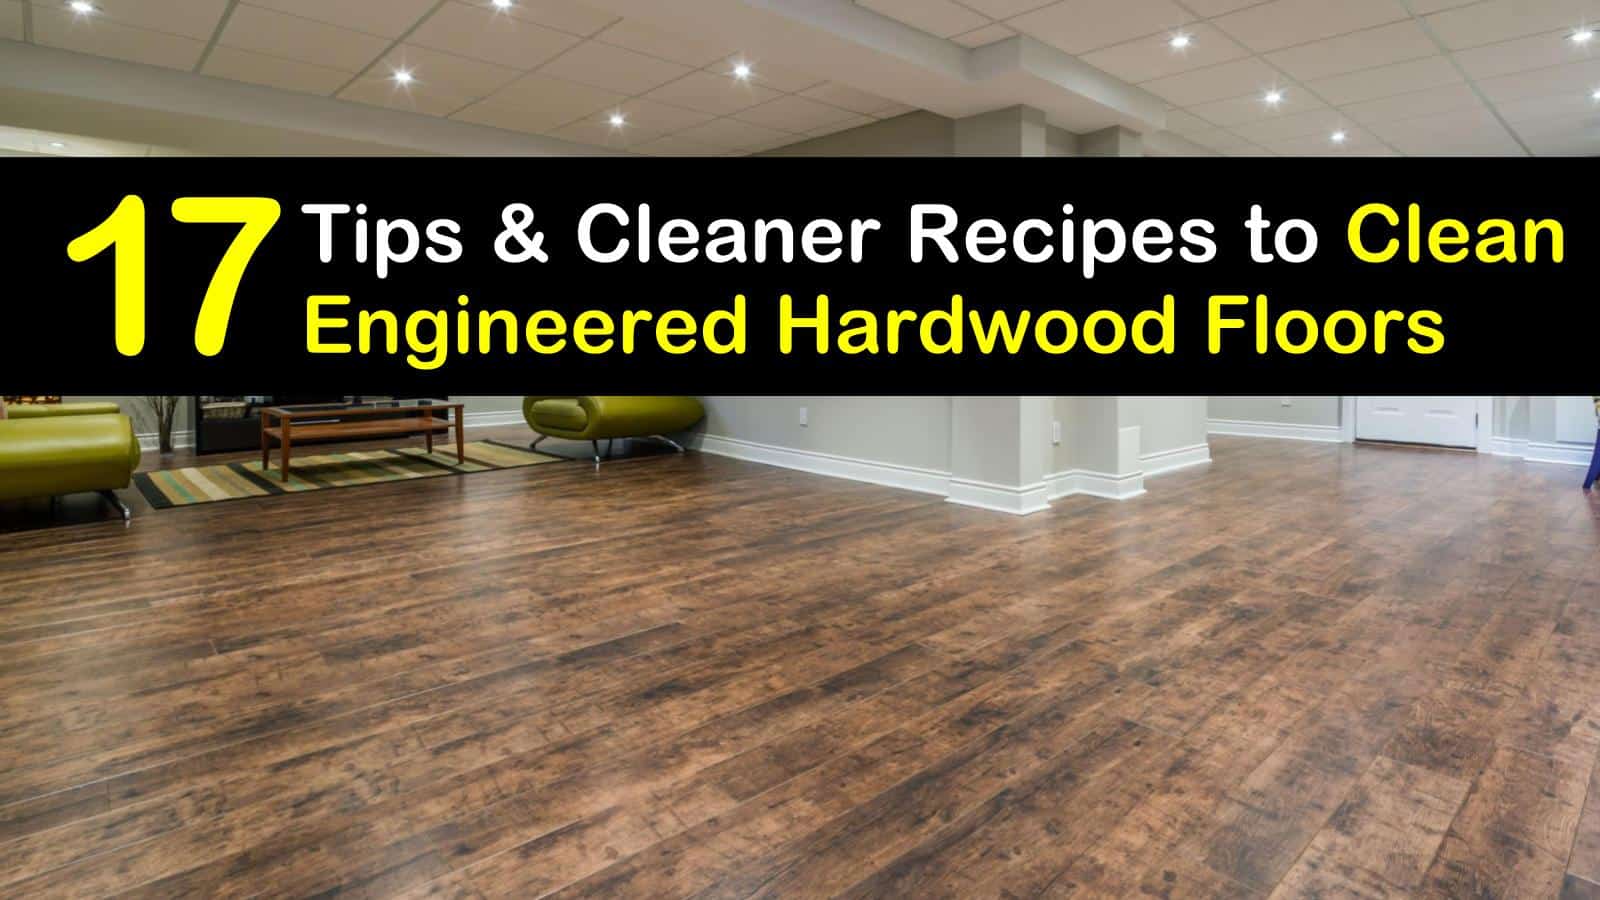 Clean Engineered Hardwood Floors, How Do You Remove Sticky Residue From Engineered Hardwood Floors